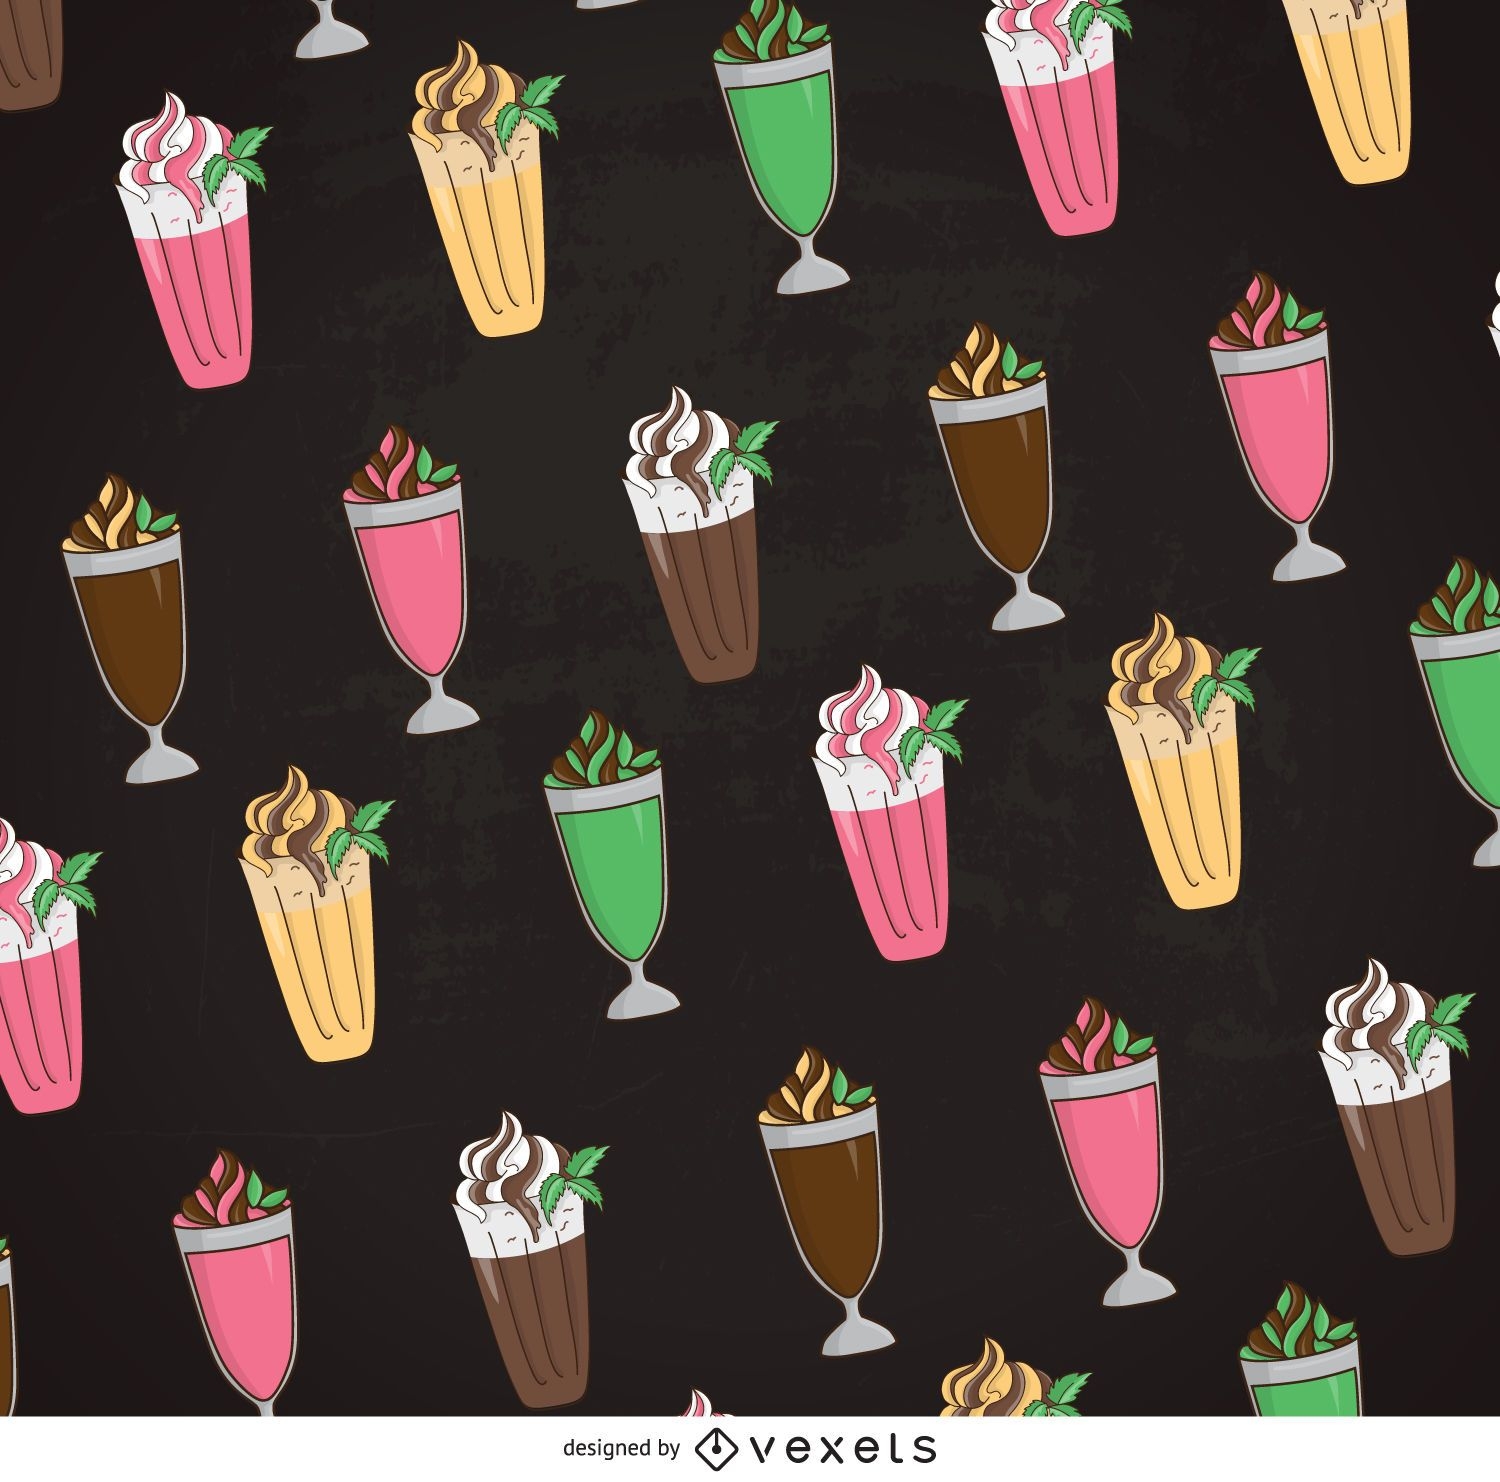 Milkshake illustration pattern